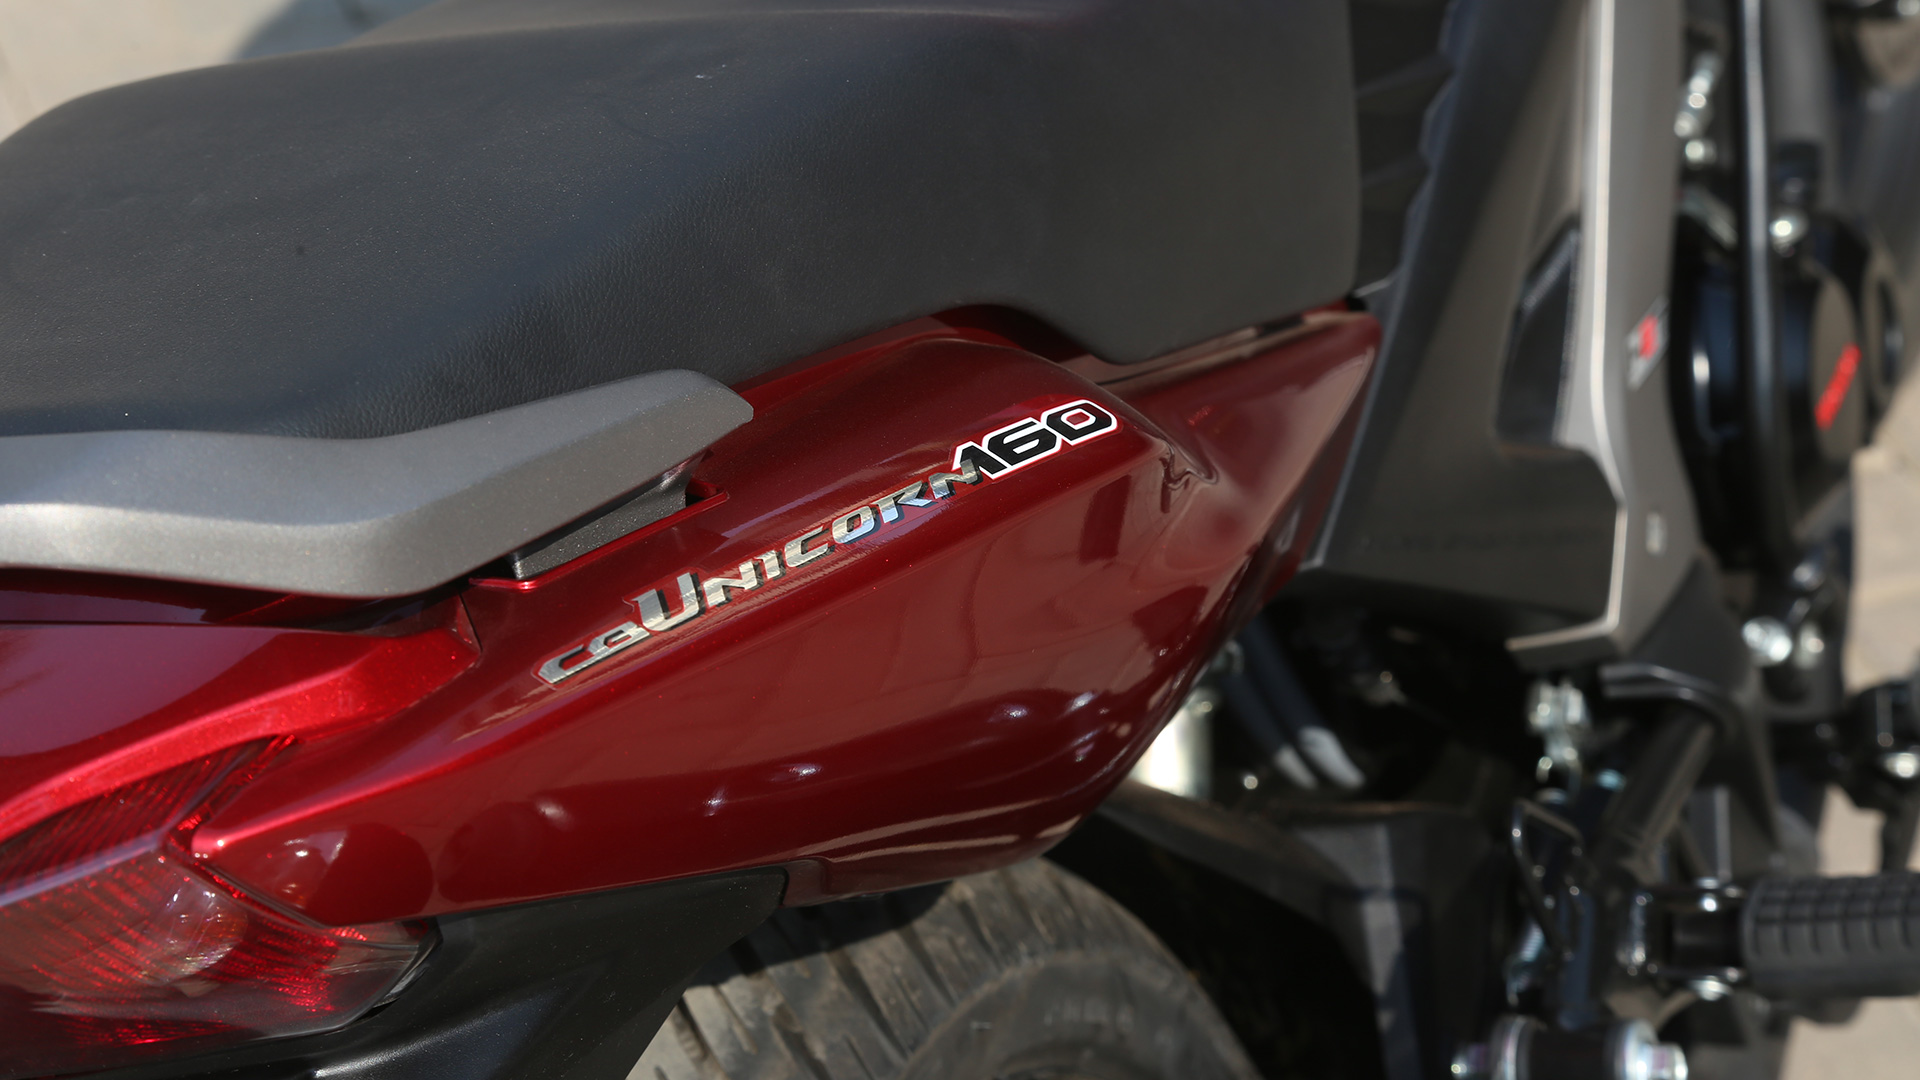 Honda CB Unicorn 160 2015 CBS Exterior